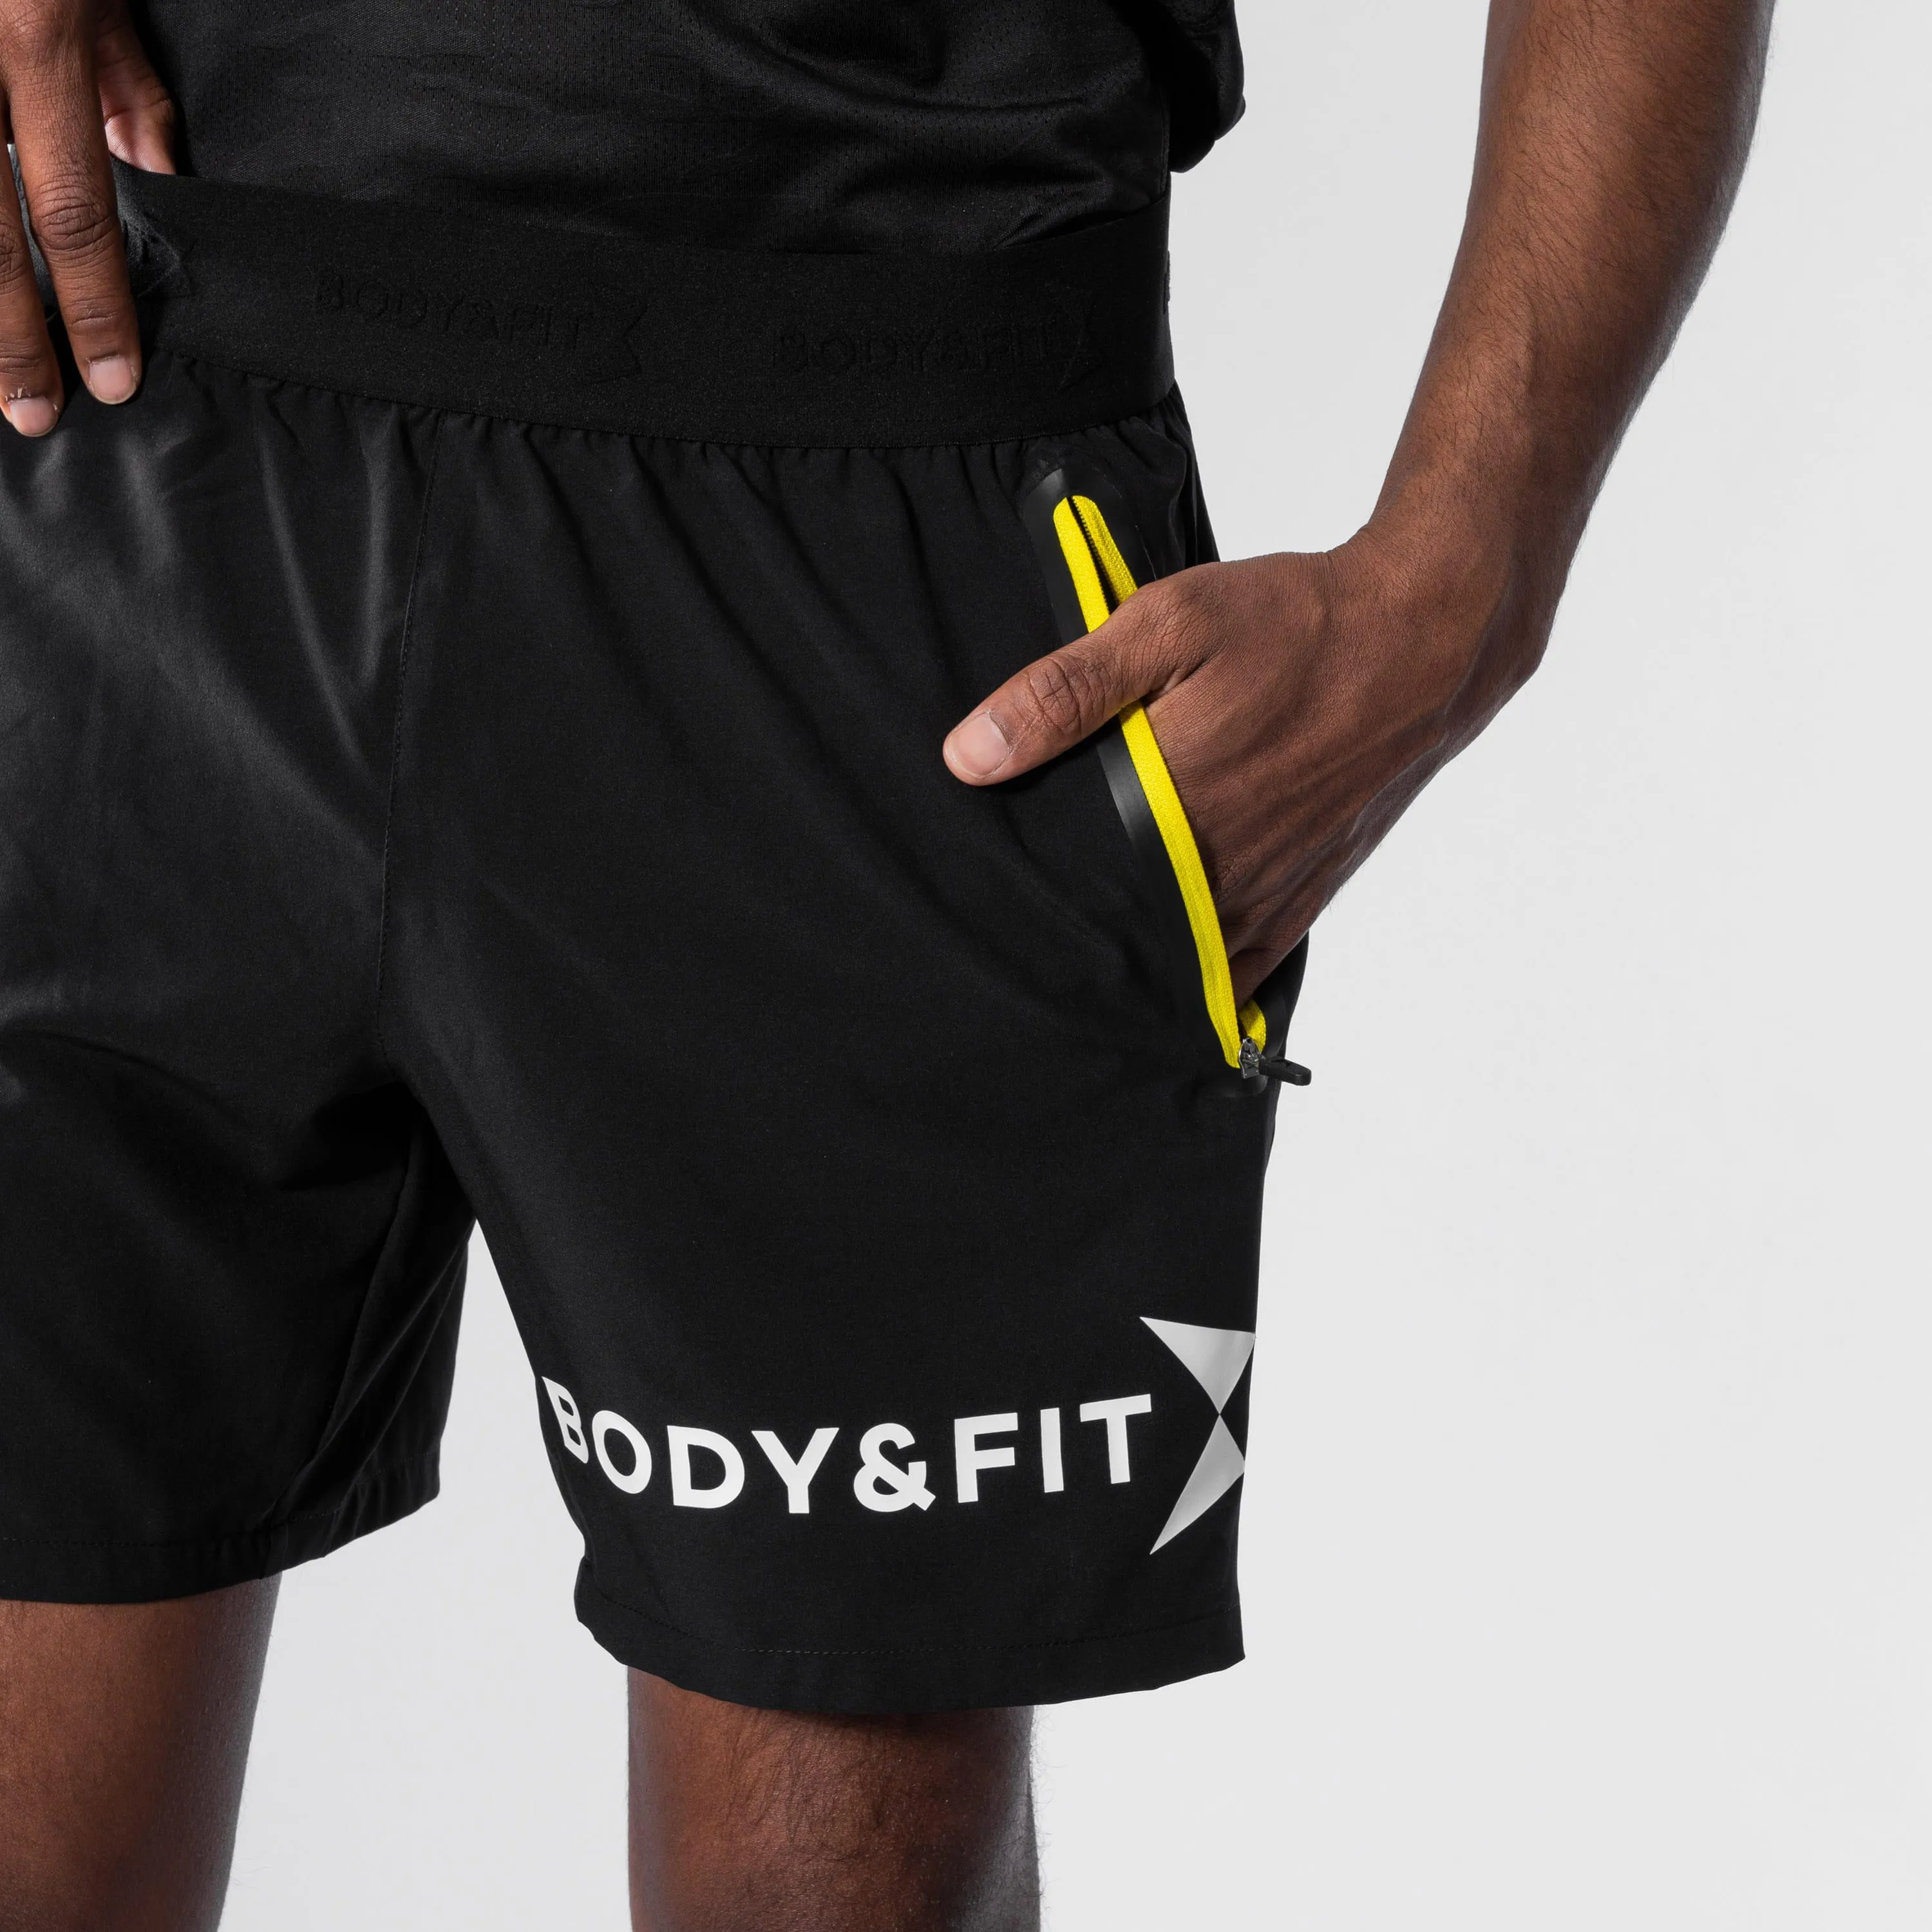 Perfection movement Short - Body & Fit sportswear - L